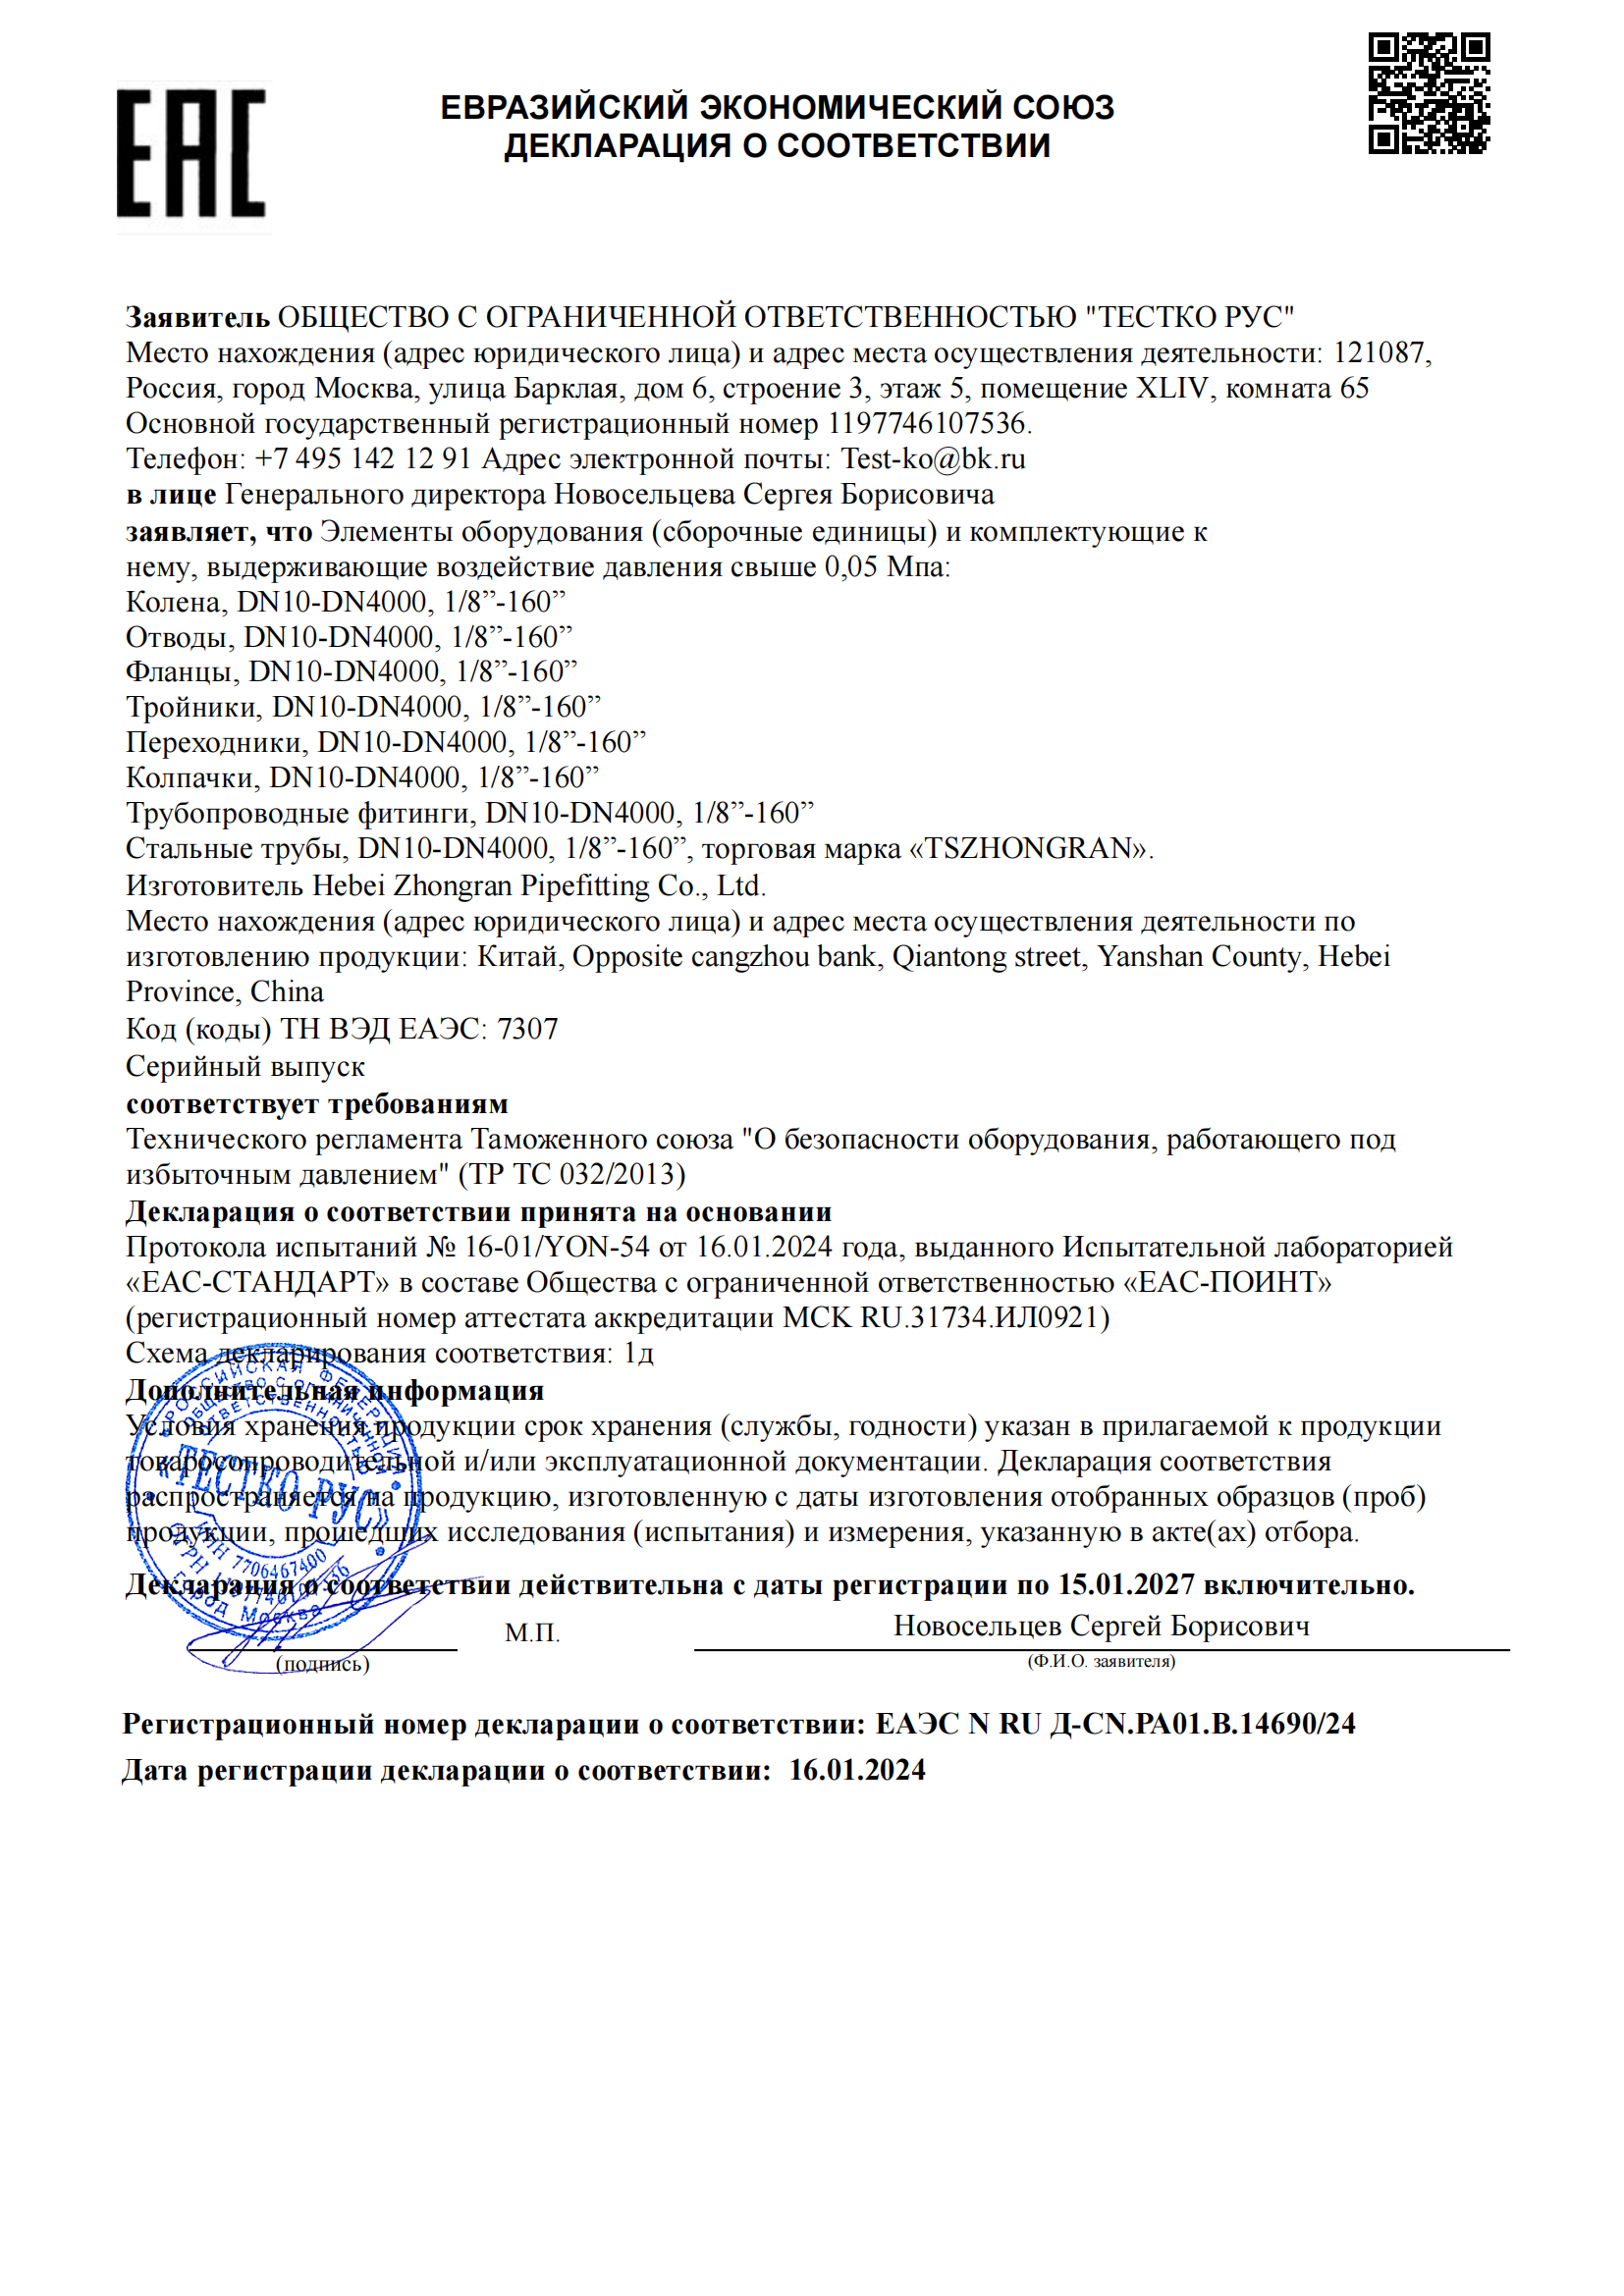 EAC DOC证书  Макет ДС ТР ЕАЭС_00